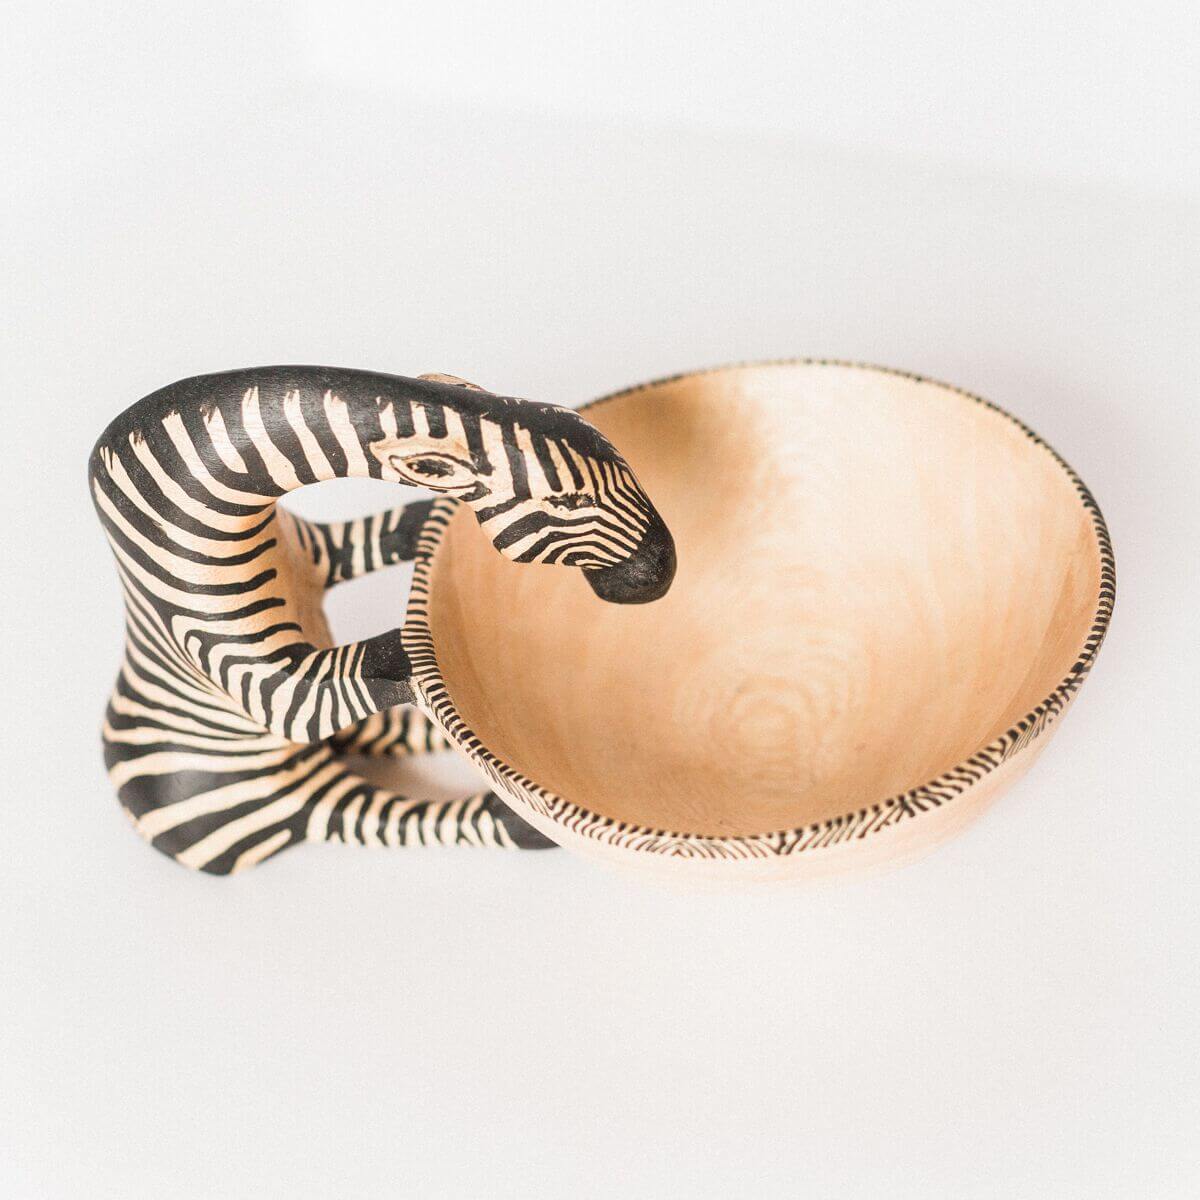 Acacia Creations Drinking Zebra Bowl
Jungle Pillows